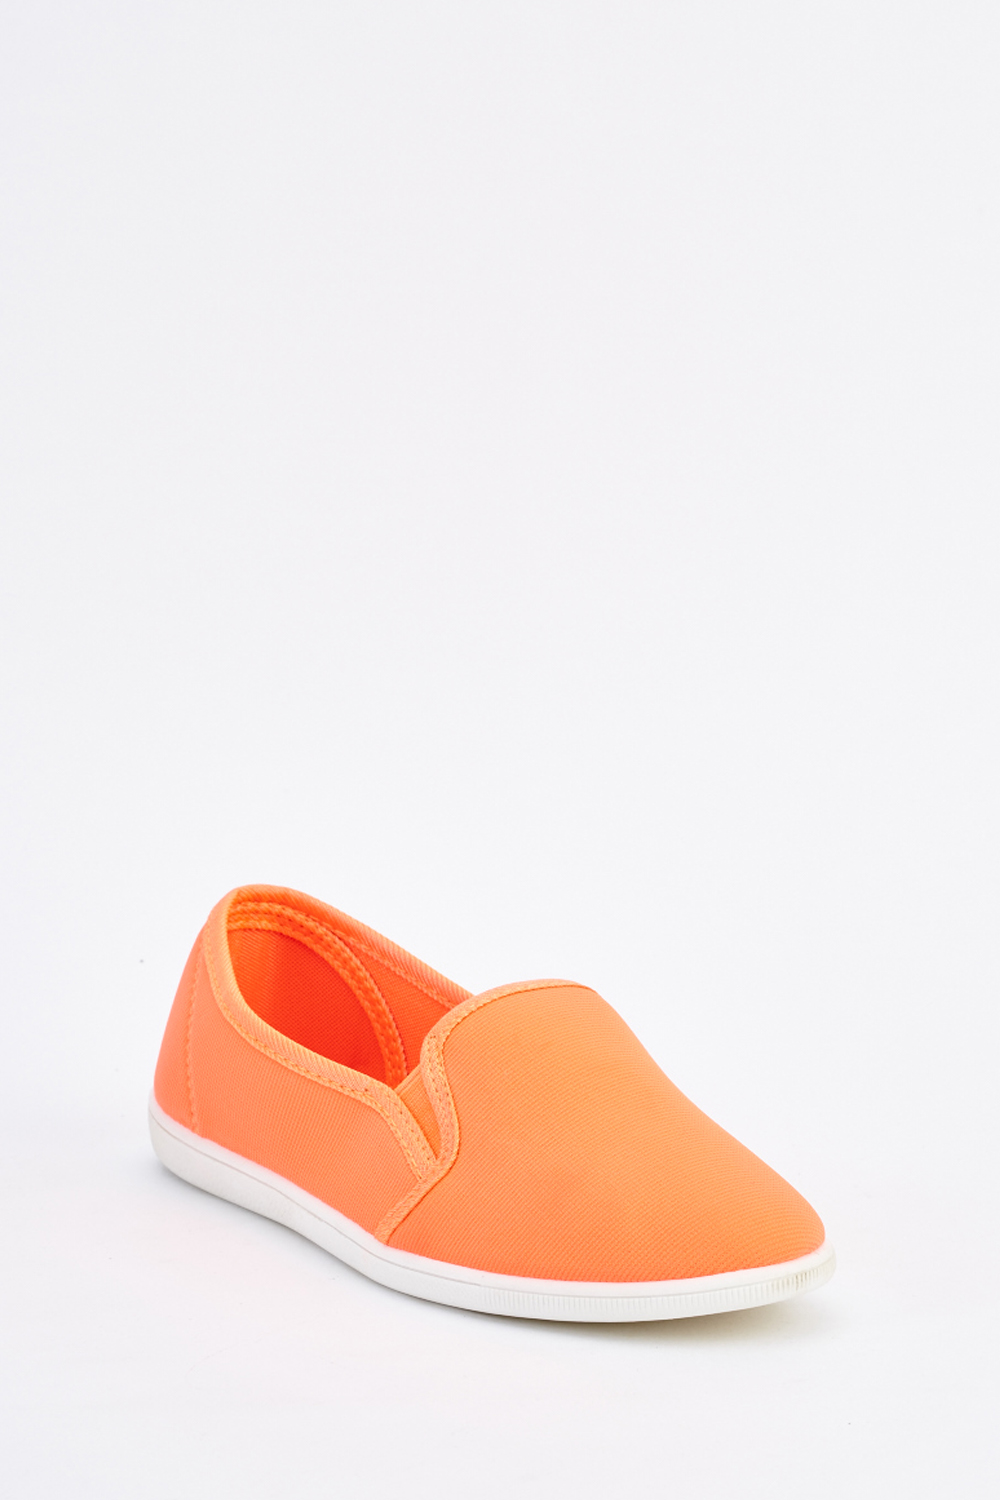 Neon Plimsoll Shoes - 3 Colours - Just £5